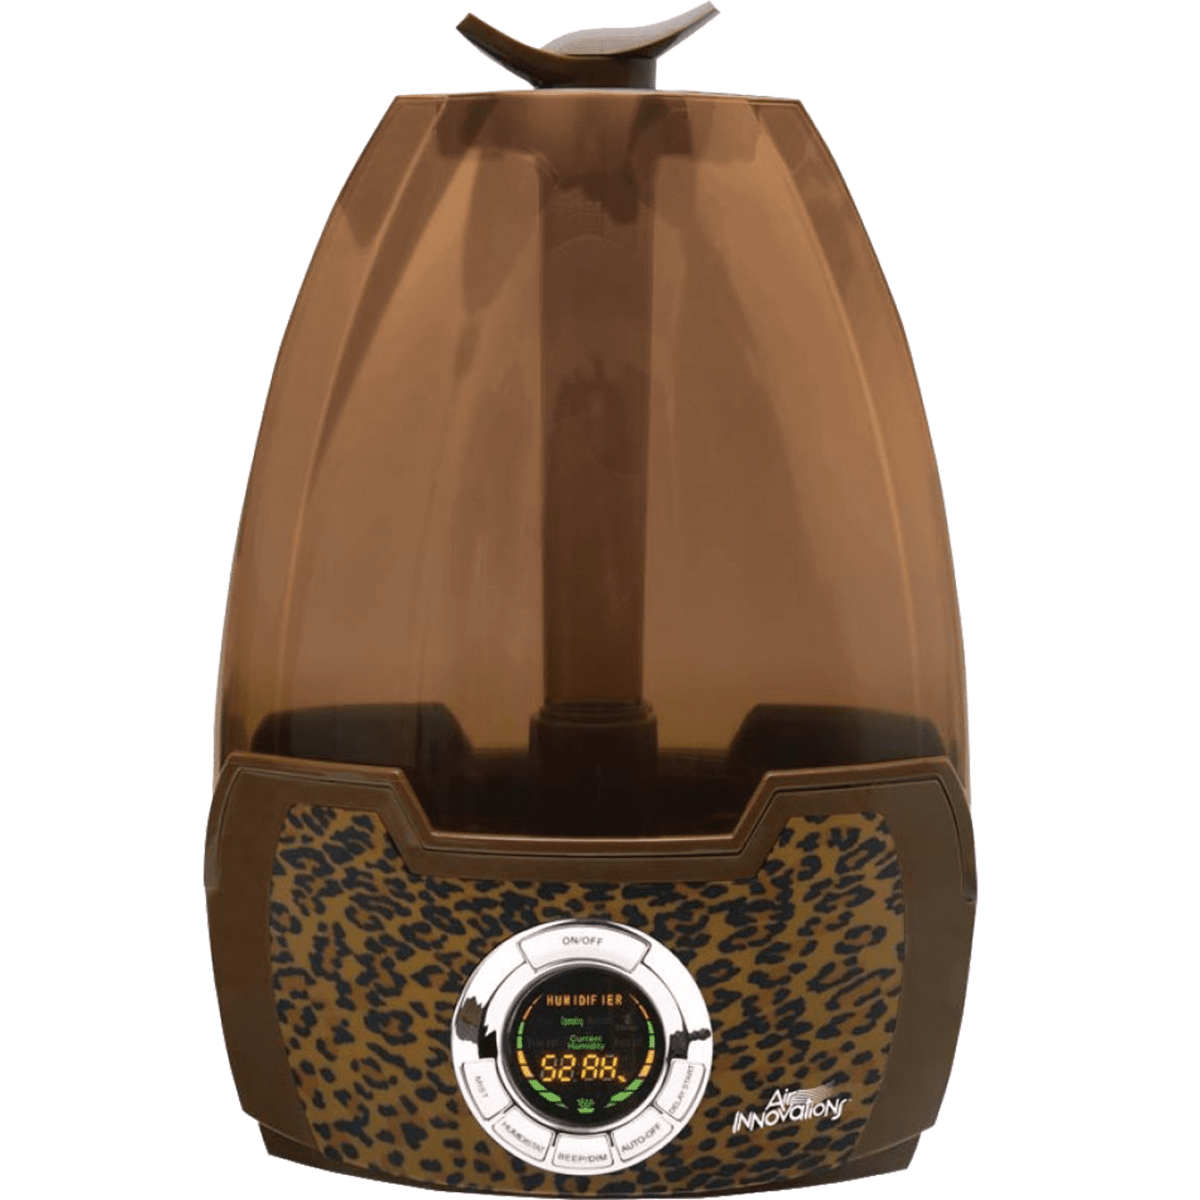 Air Innovations Cool Mist Digital Humidifier - Leopard (mh-602-leopard)